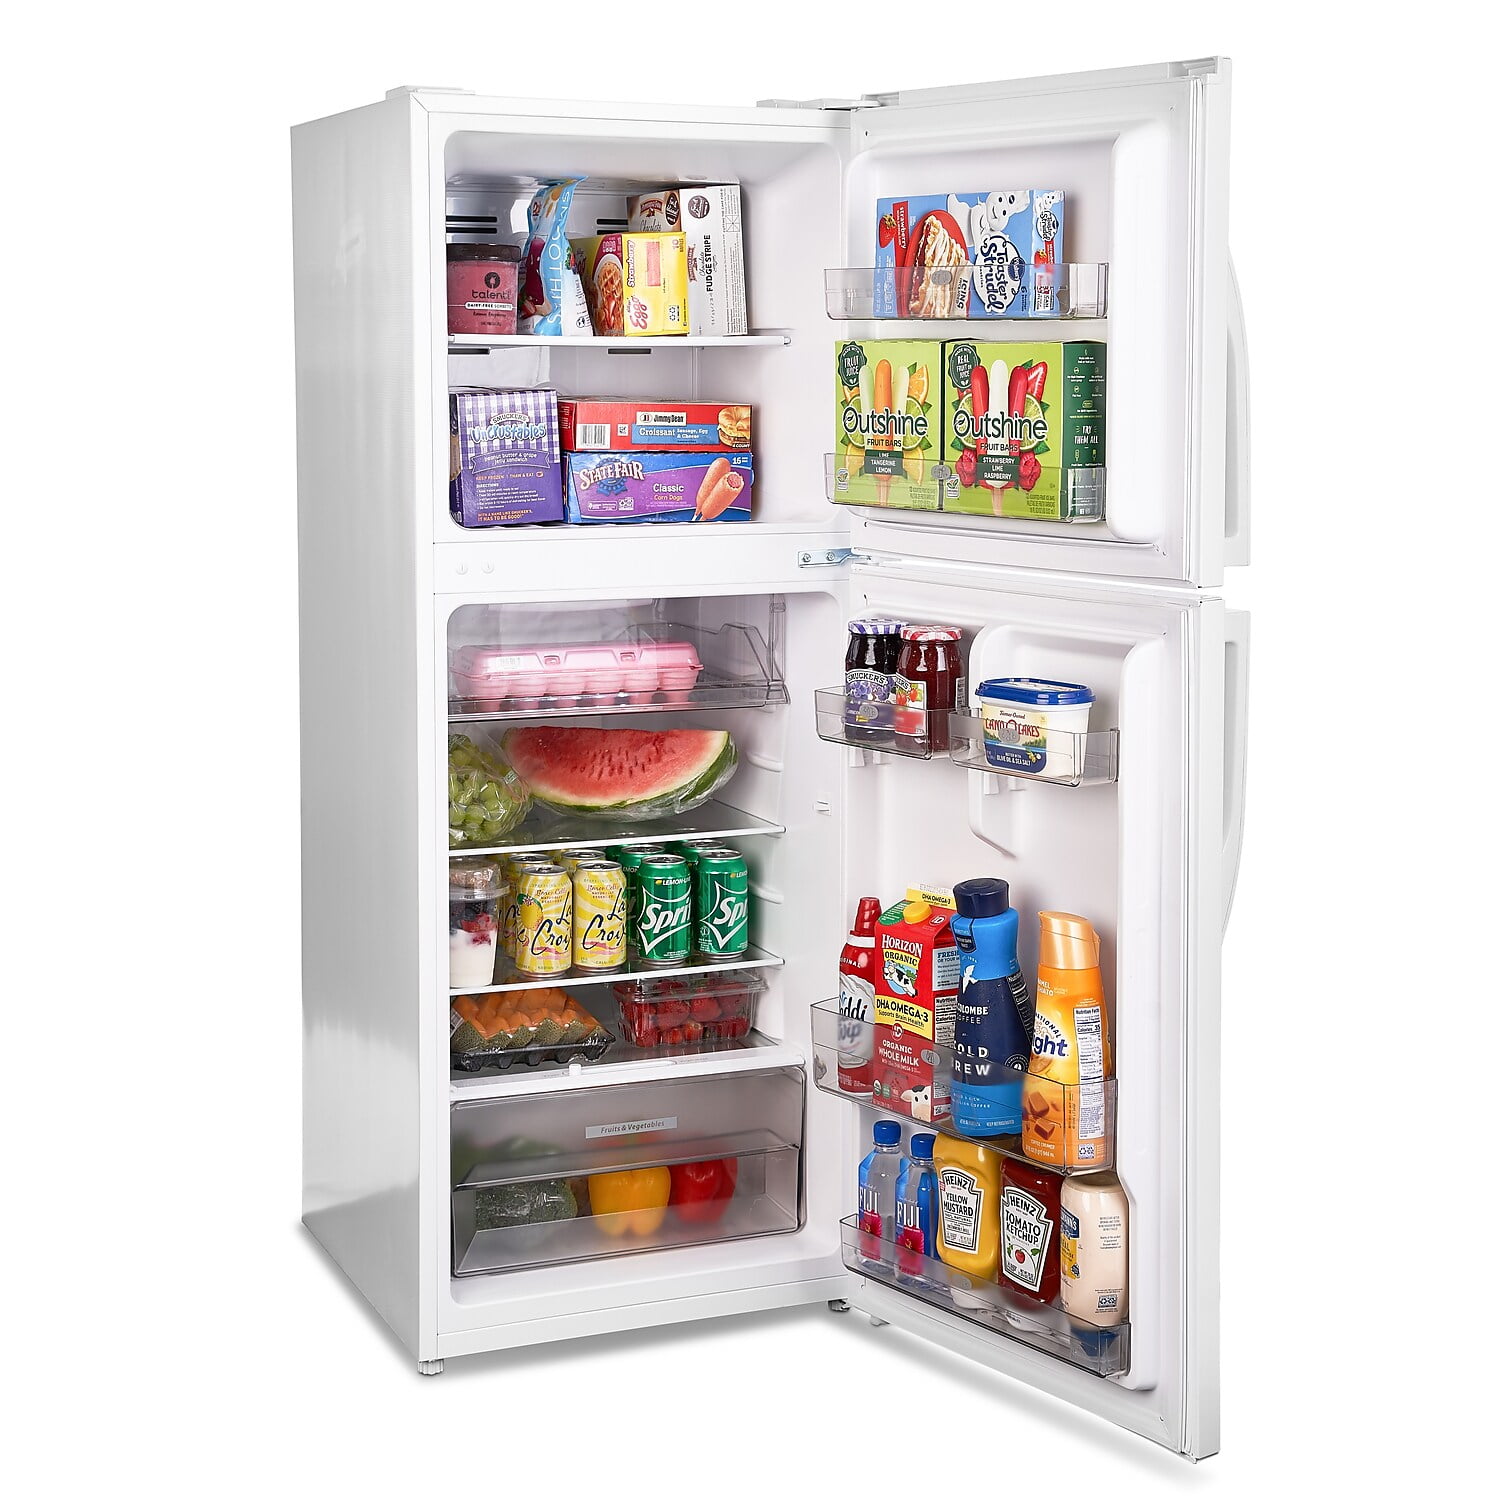 Premium 7.1 Cu. ft. Frost Free Top Freezer Refrigerator in Stainless Steel Look